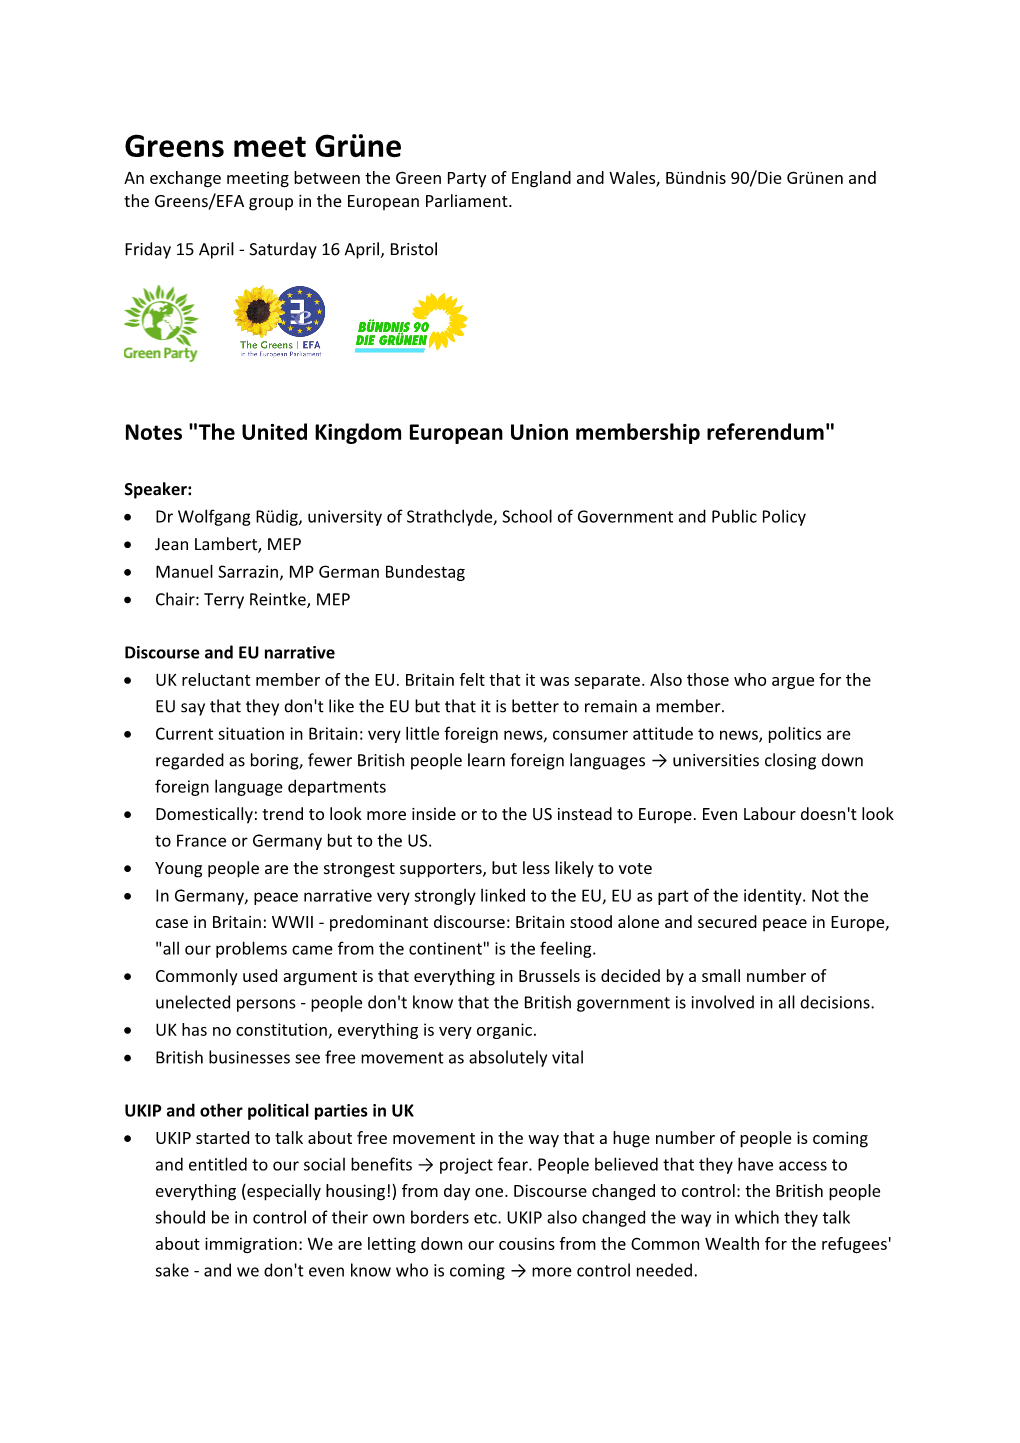 Notes the United Kingdom European Union Membership Referendum